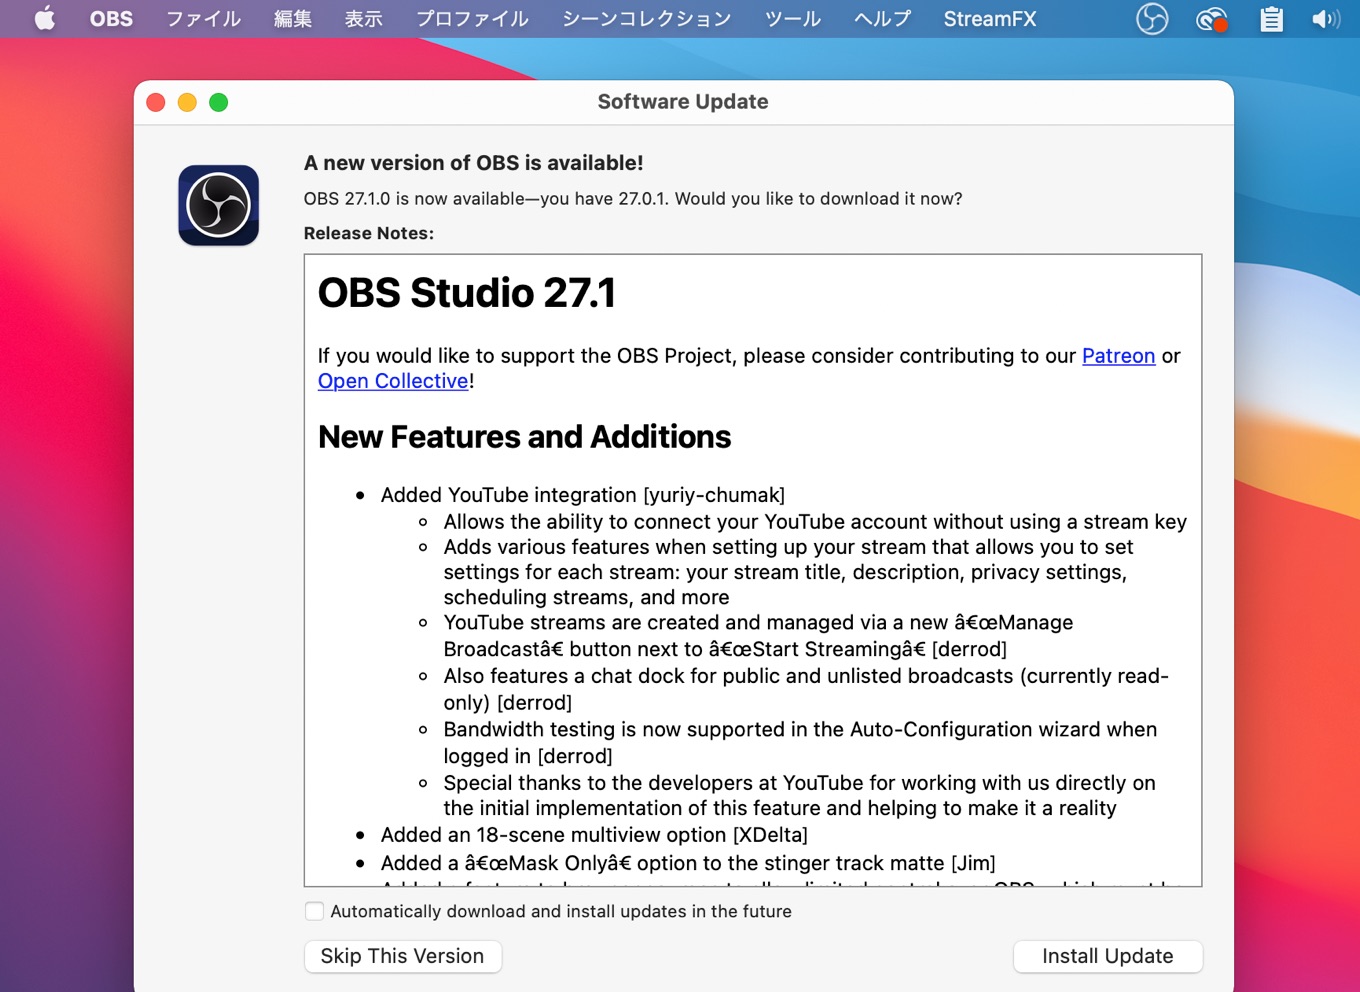 OBS Studio v27.1 release note